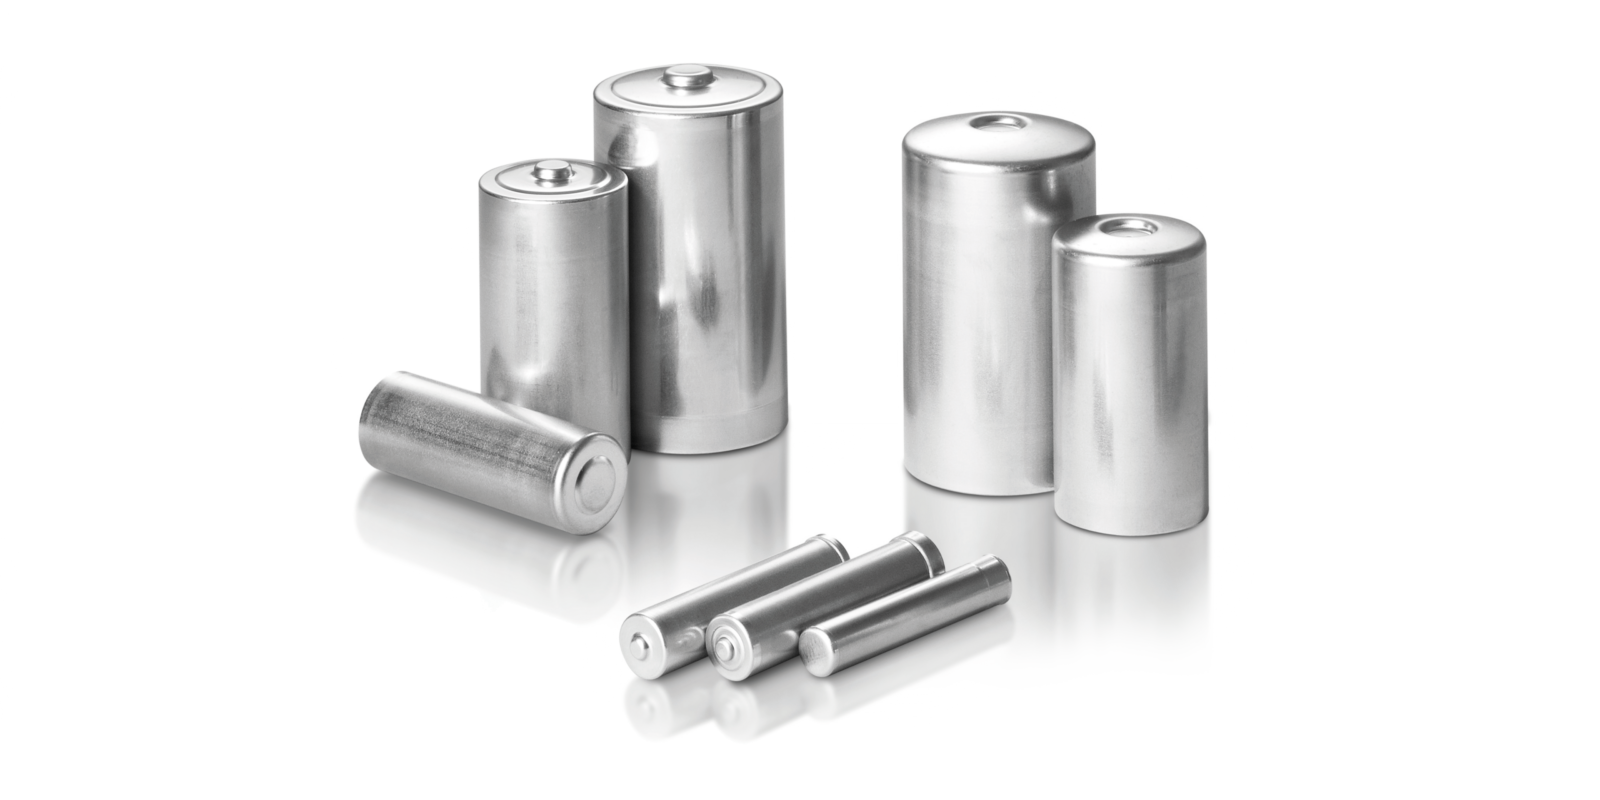 H&T Batteries | H&T Battery Components for Alkaline Batteries